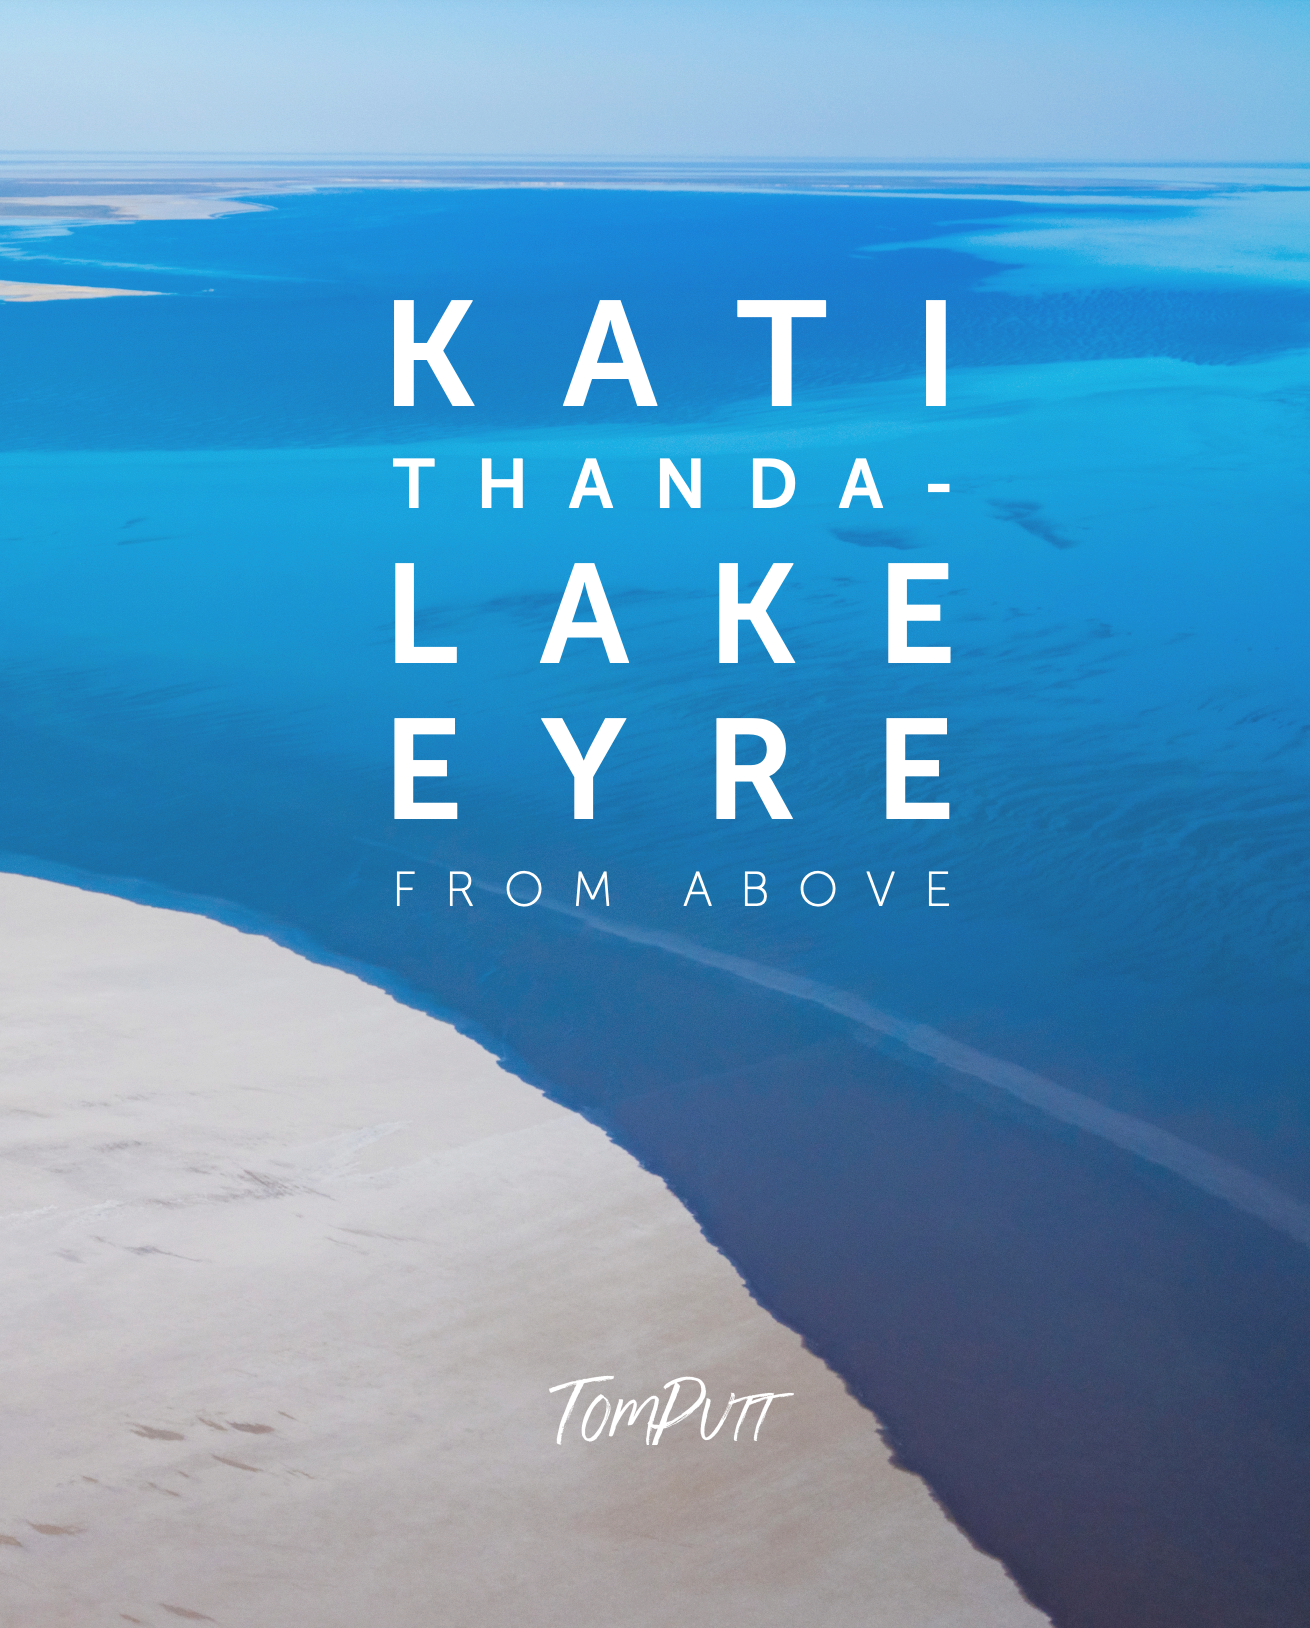 Kati Thanda-Lake Eyre From Above book